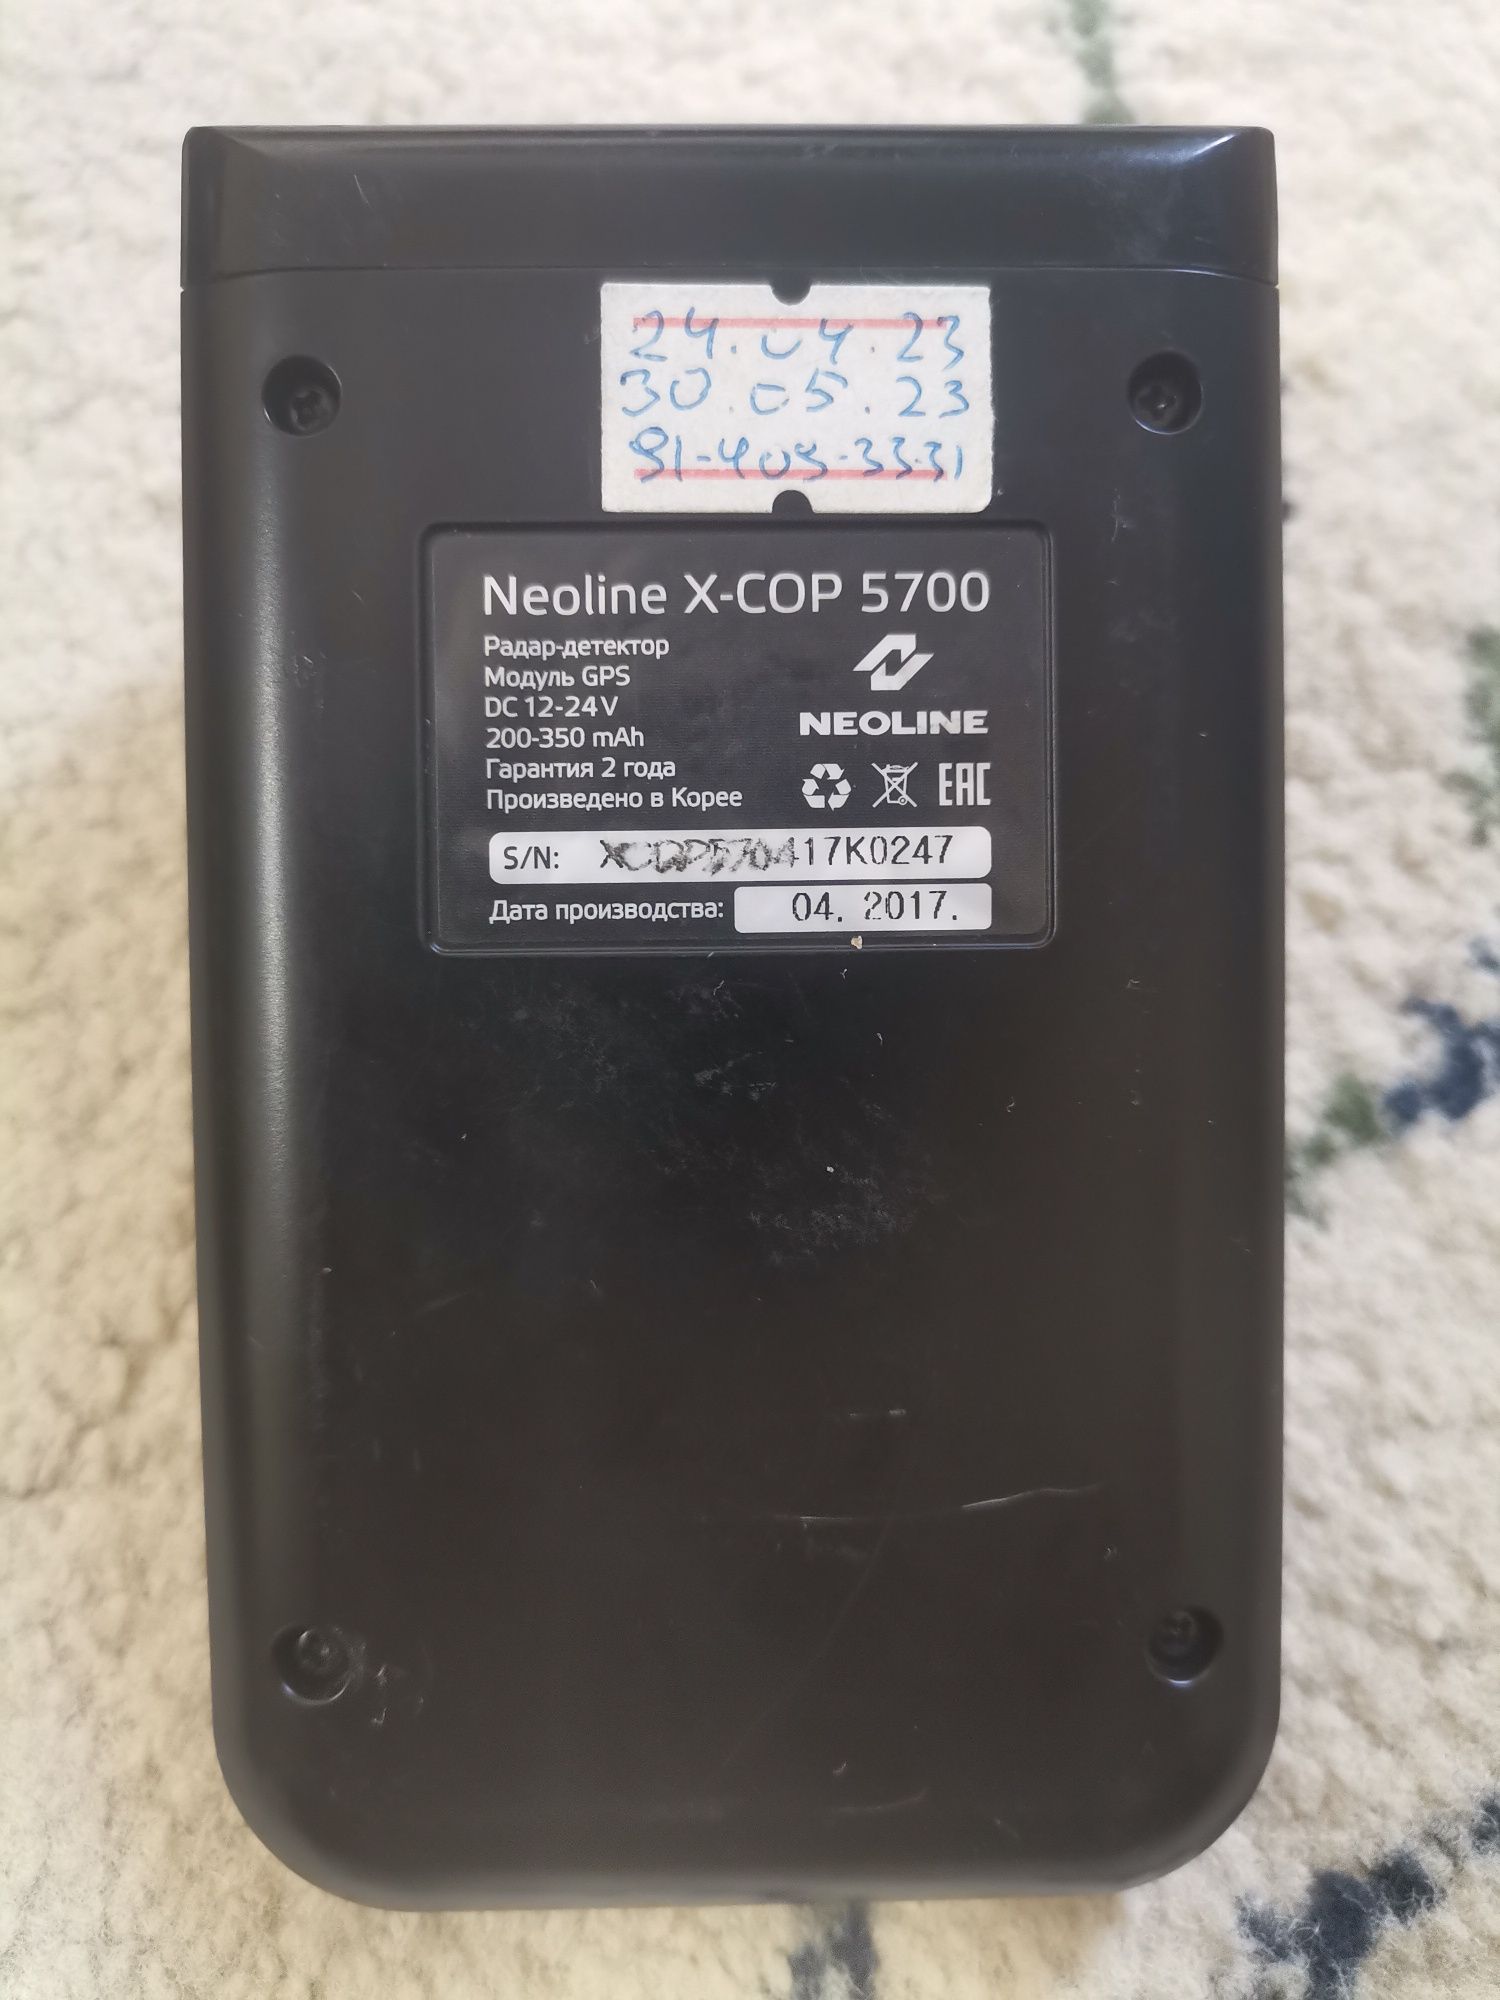 Neoline x-cop 5700 sotiladi